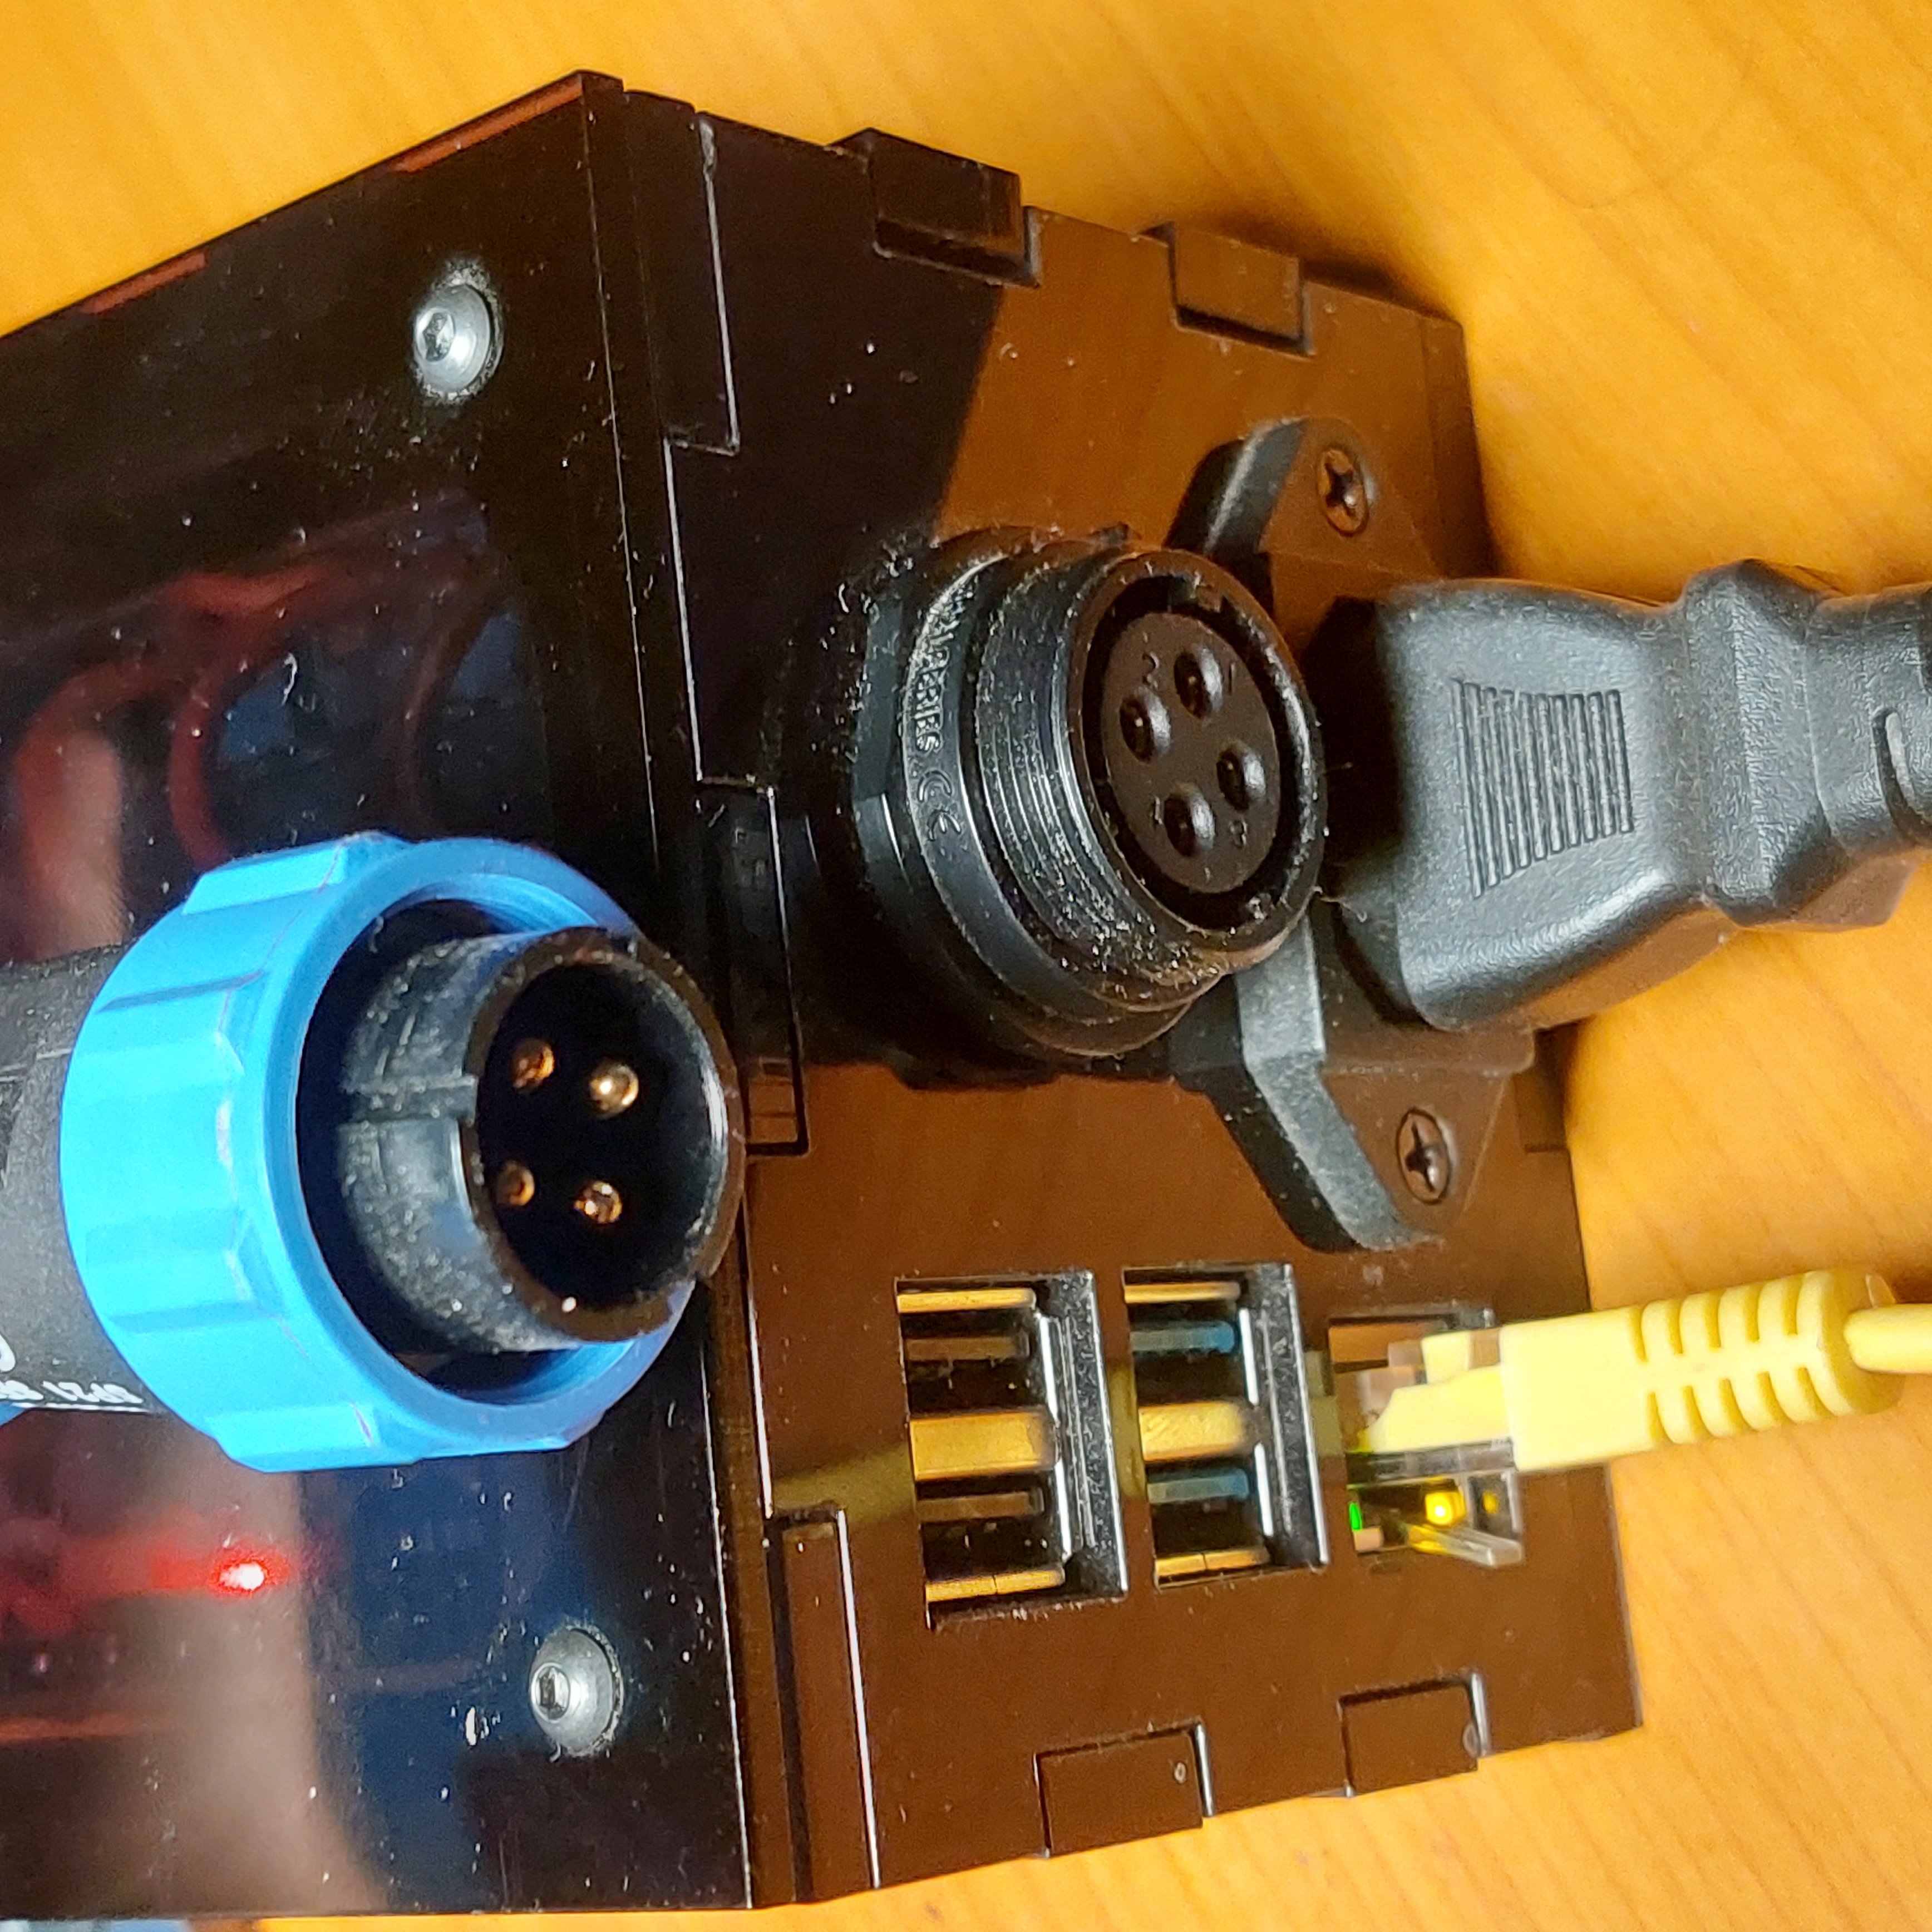 4-pin plug and socket for motor control